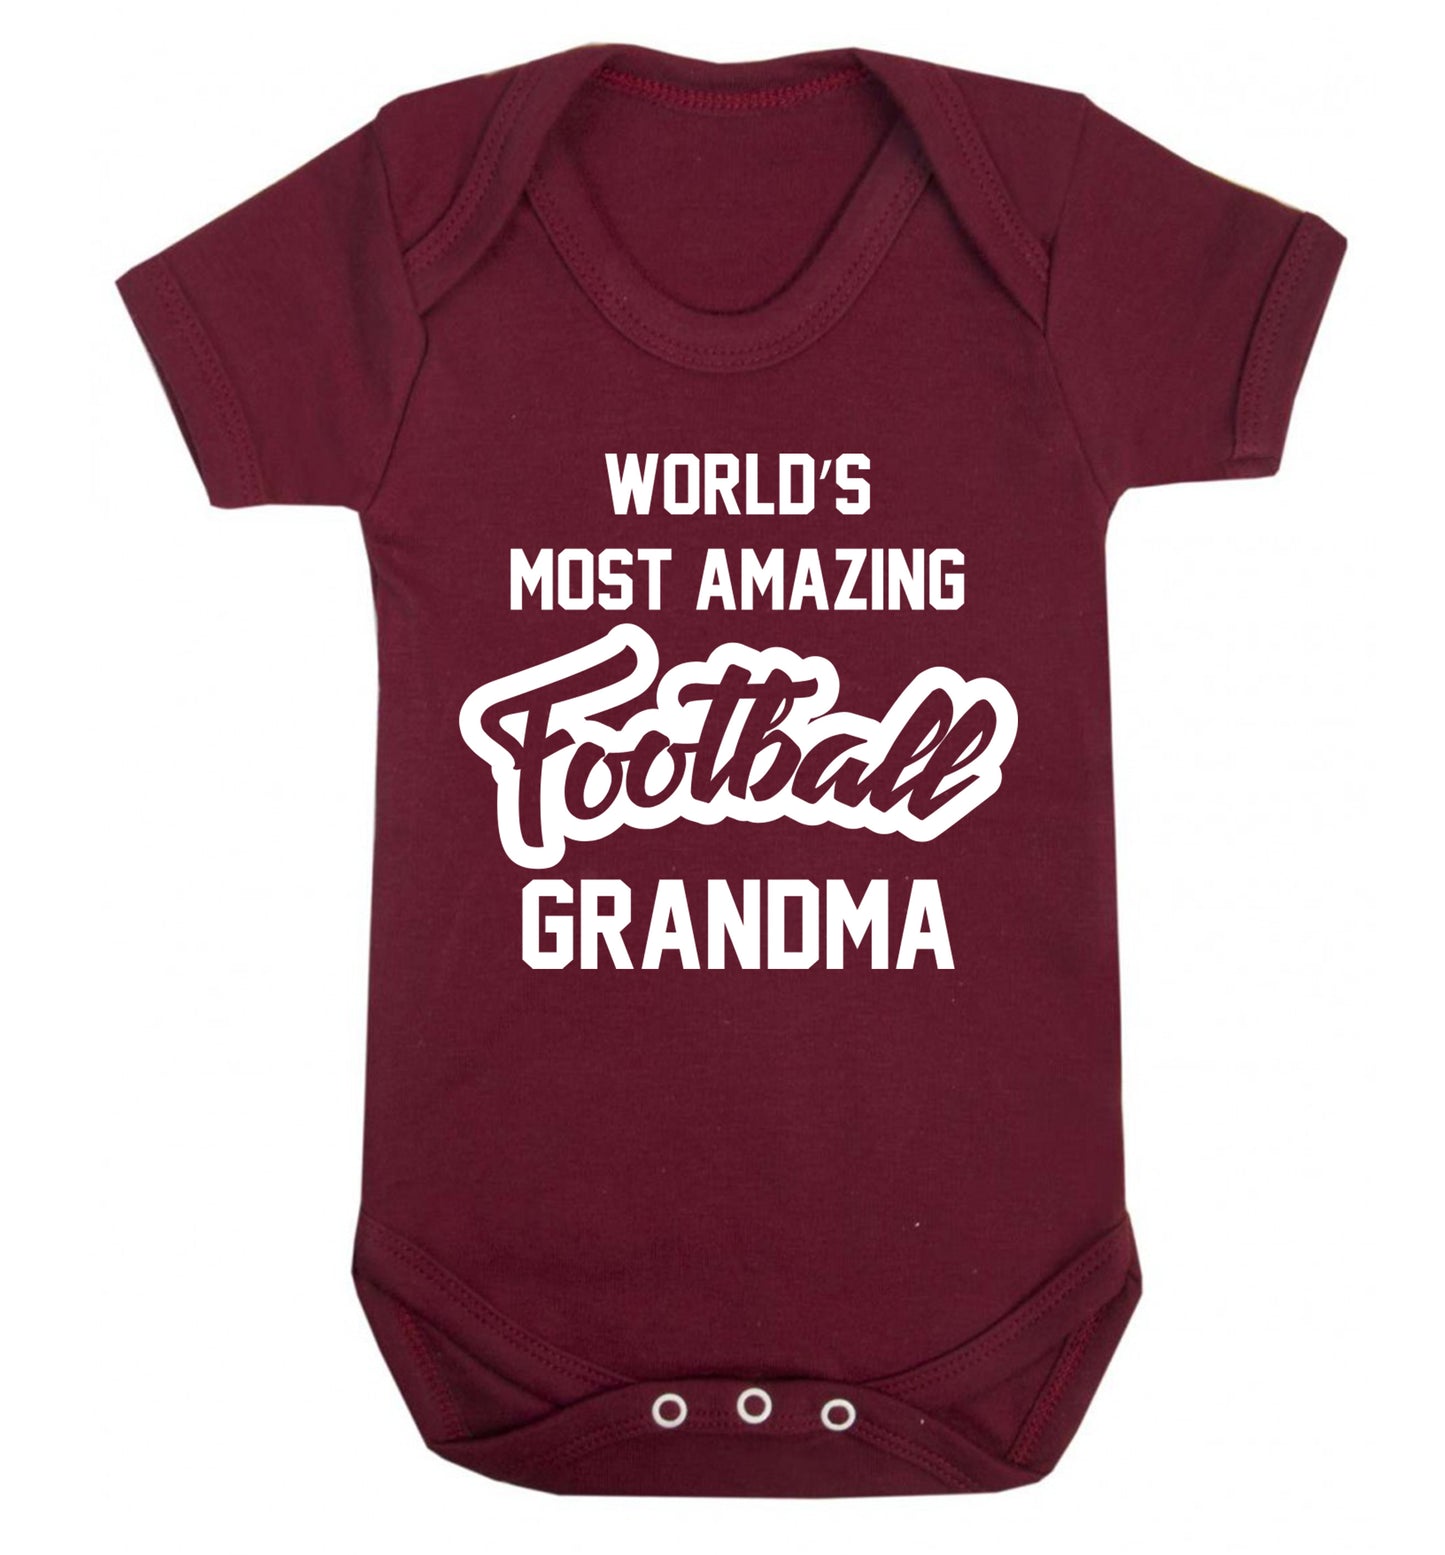 Worlds most amazing football grandma Baby Vest maroon 18-24 months